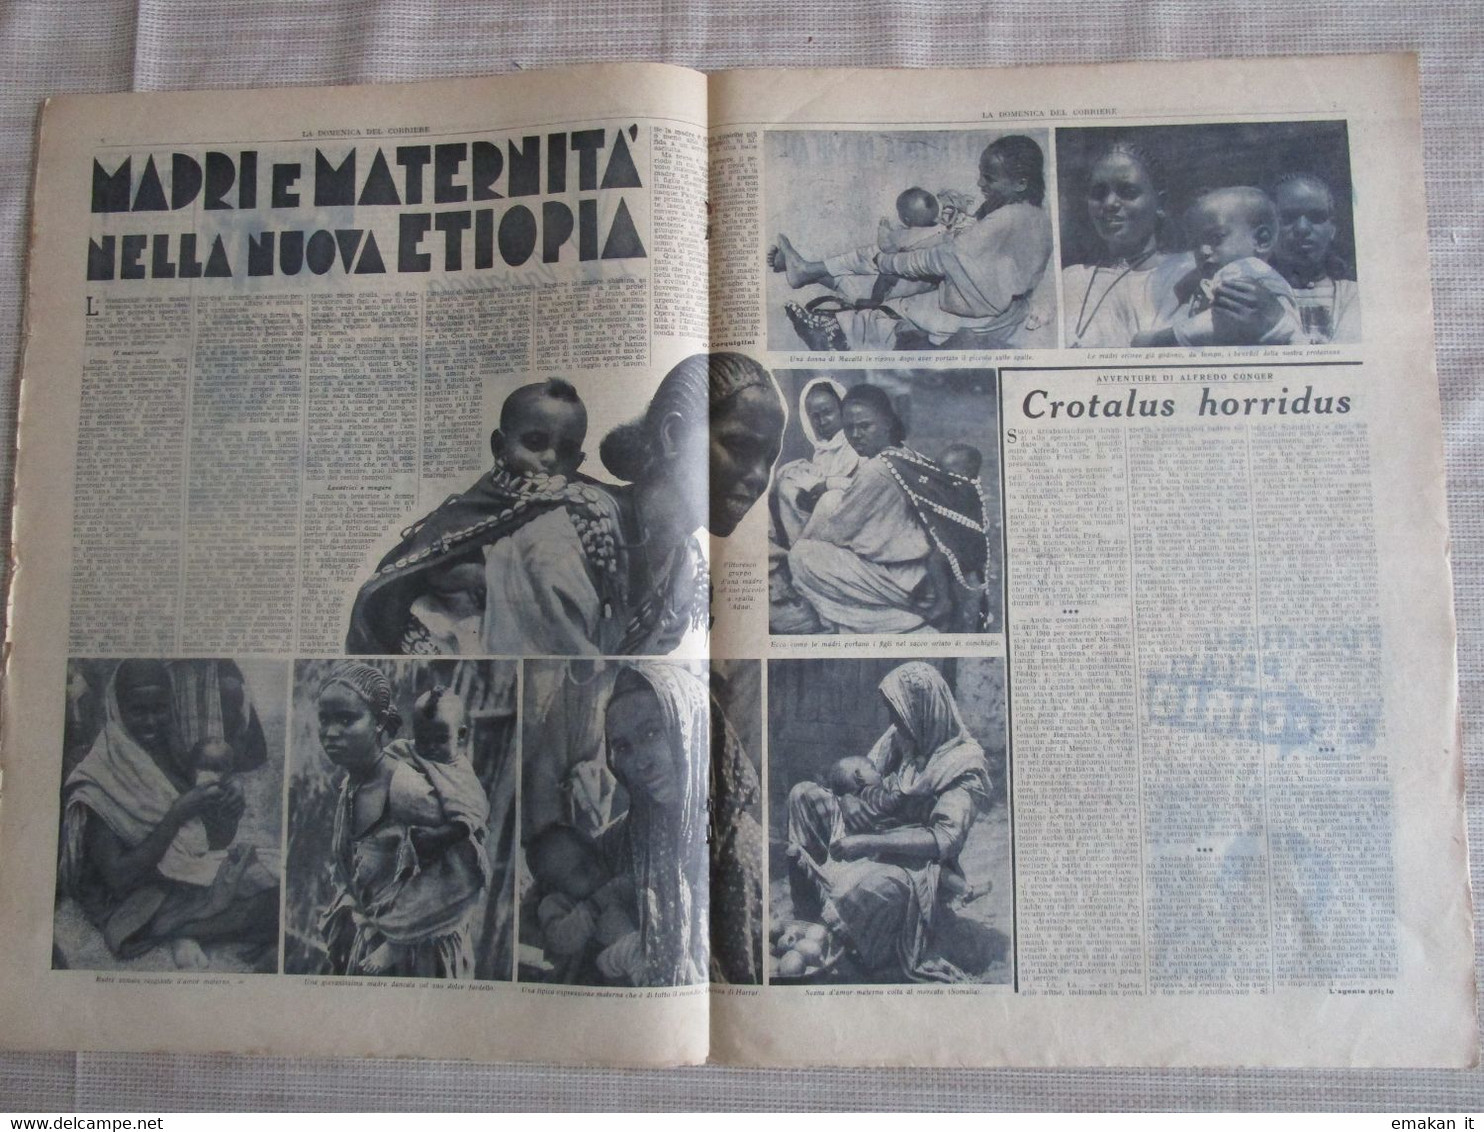 # DOMENICA DEL CORRIERE N 45 / 1936 AFRICA ORIENTALE / IL DUCE A MILANO / CAMPARI - Premières éditions